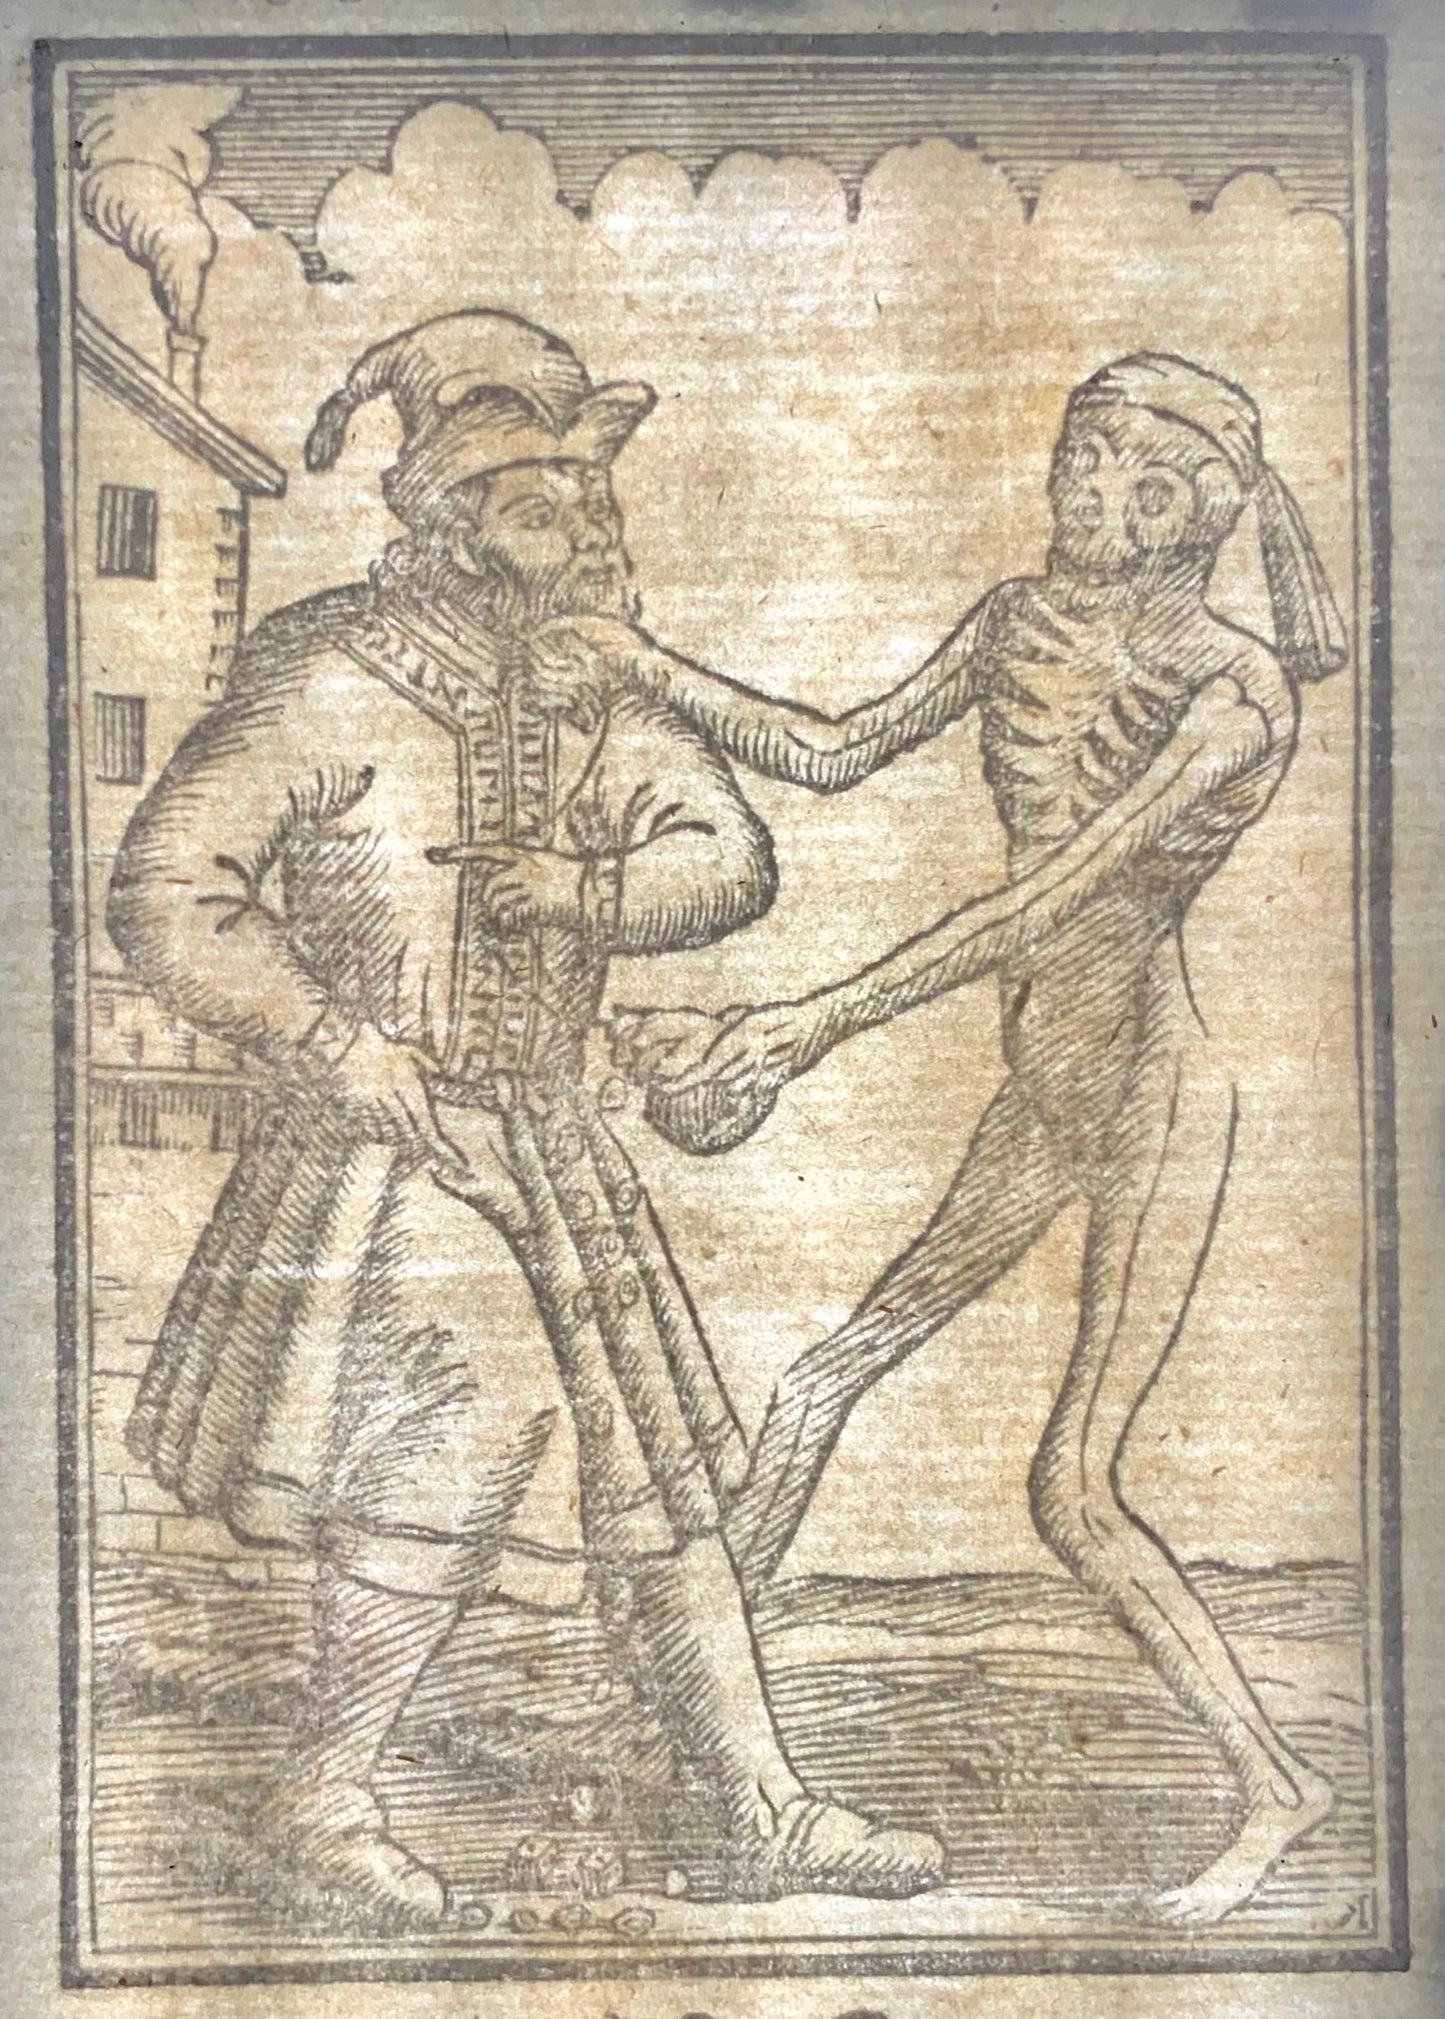 1588 [c1760] Georg Scharffenberg, danza macabra, judaica, l'ebreo